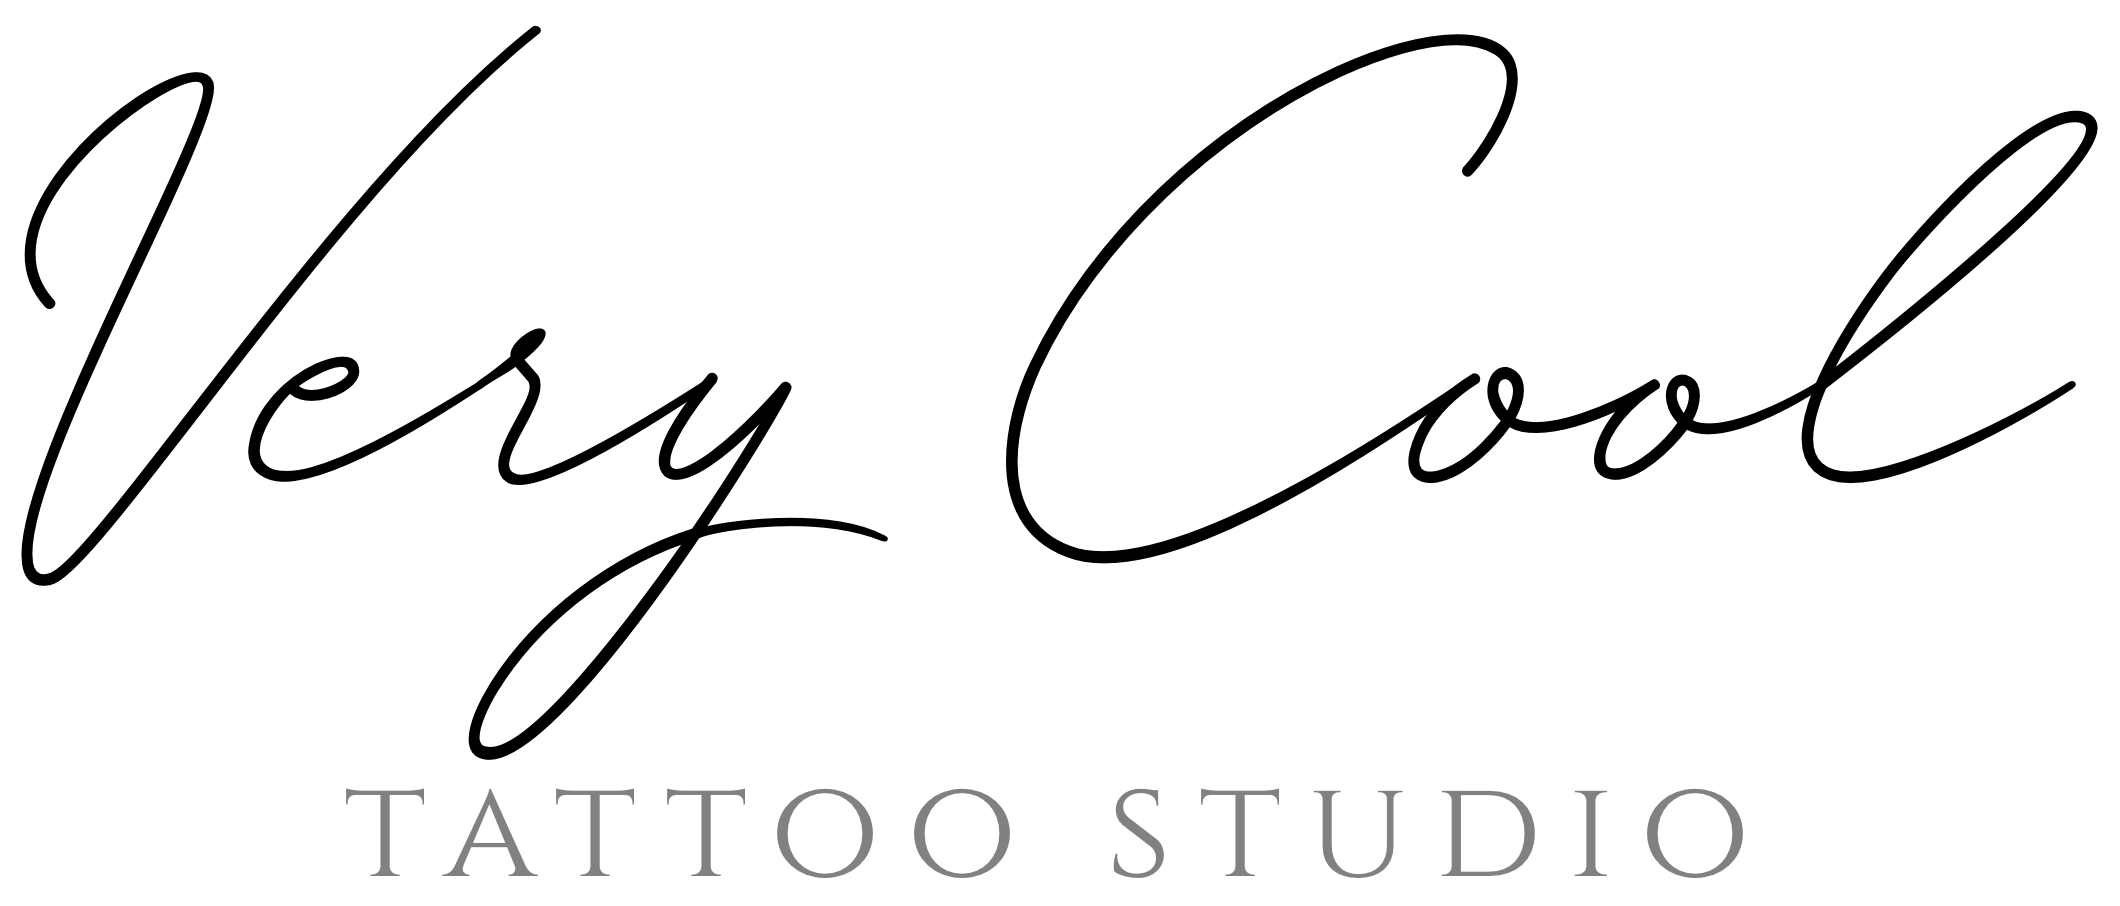 Very Cool Tattoo Studio